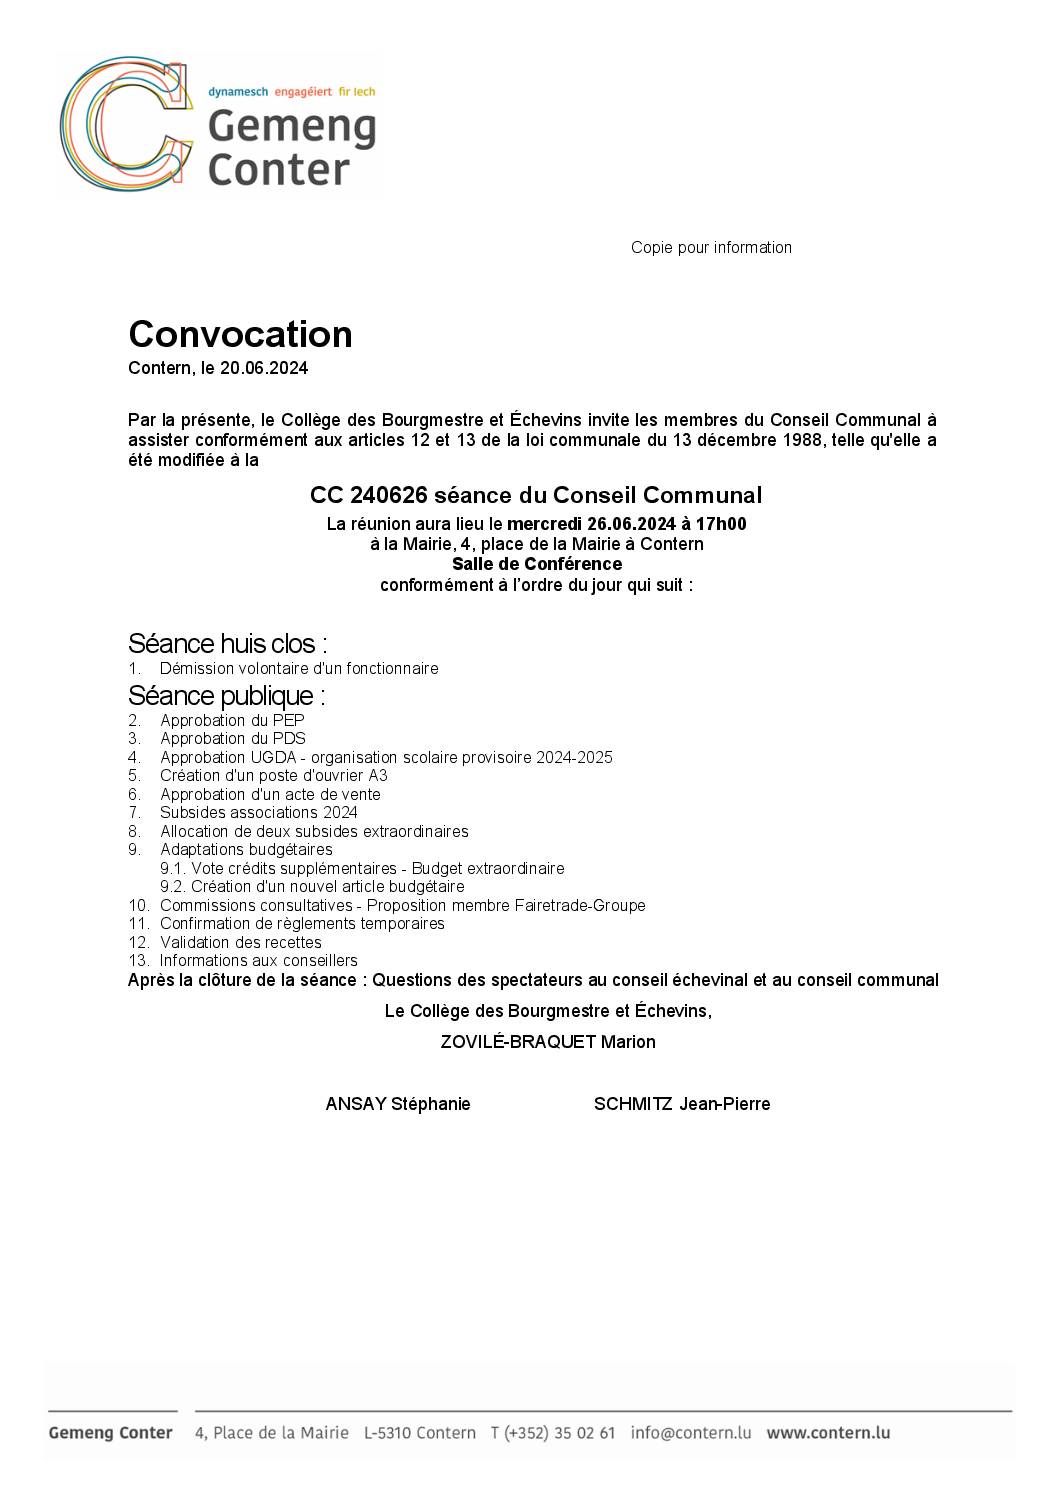 Convocation - Séance du Conseil Communal CC 240626 - 26062024 1700